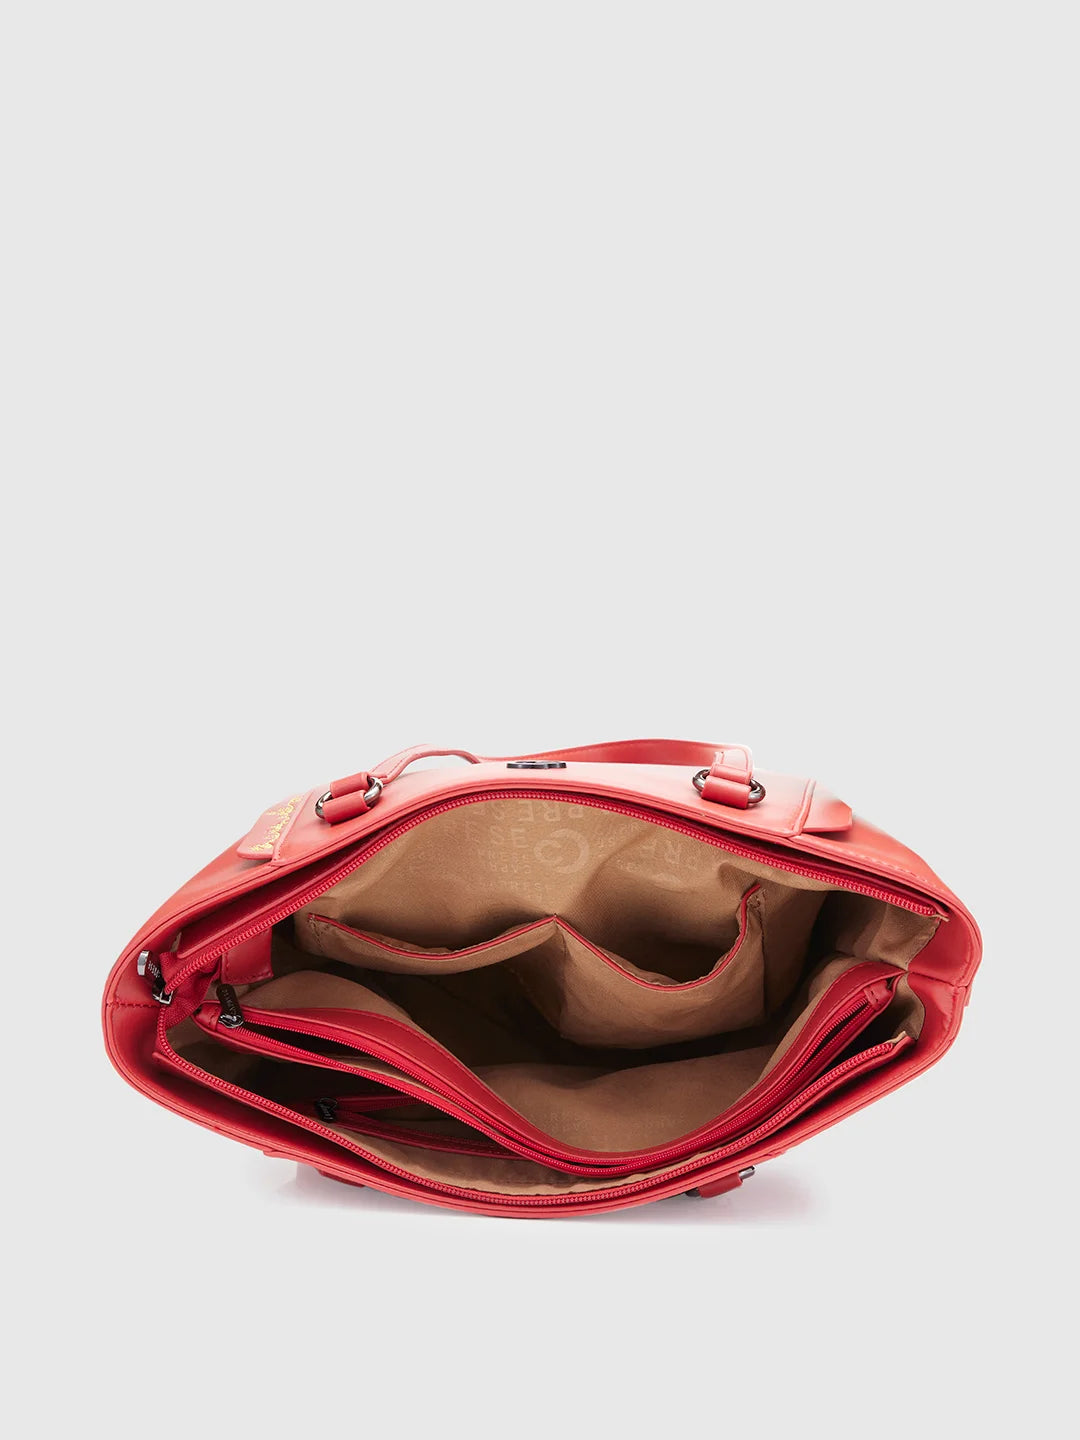 Caprese Disney Inspired Printed Mickey Mouse Collection Tote Medium Handbag